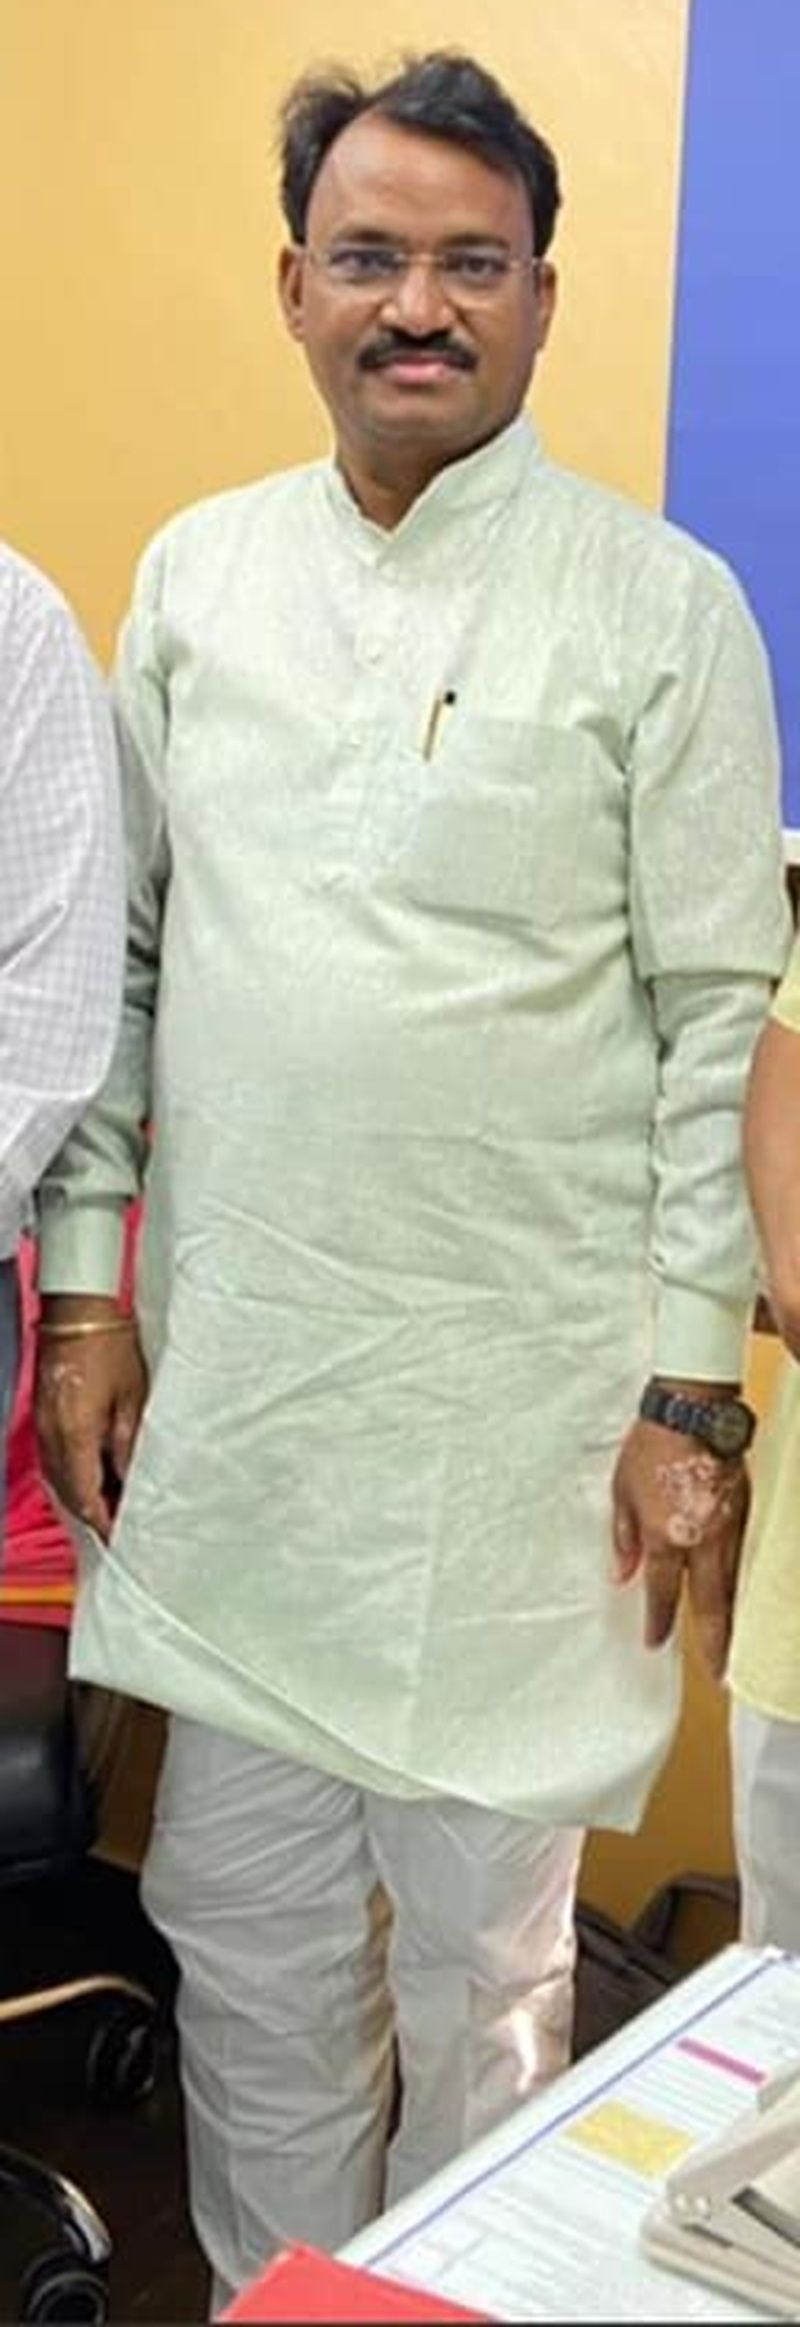 Prem Chand Bairwa